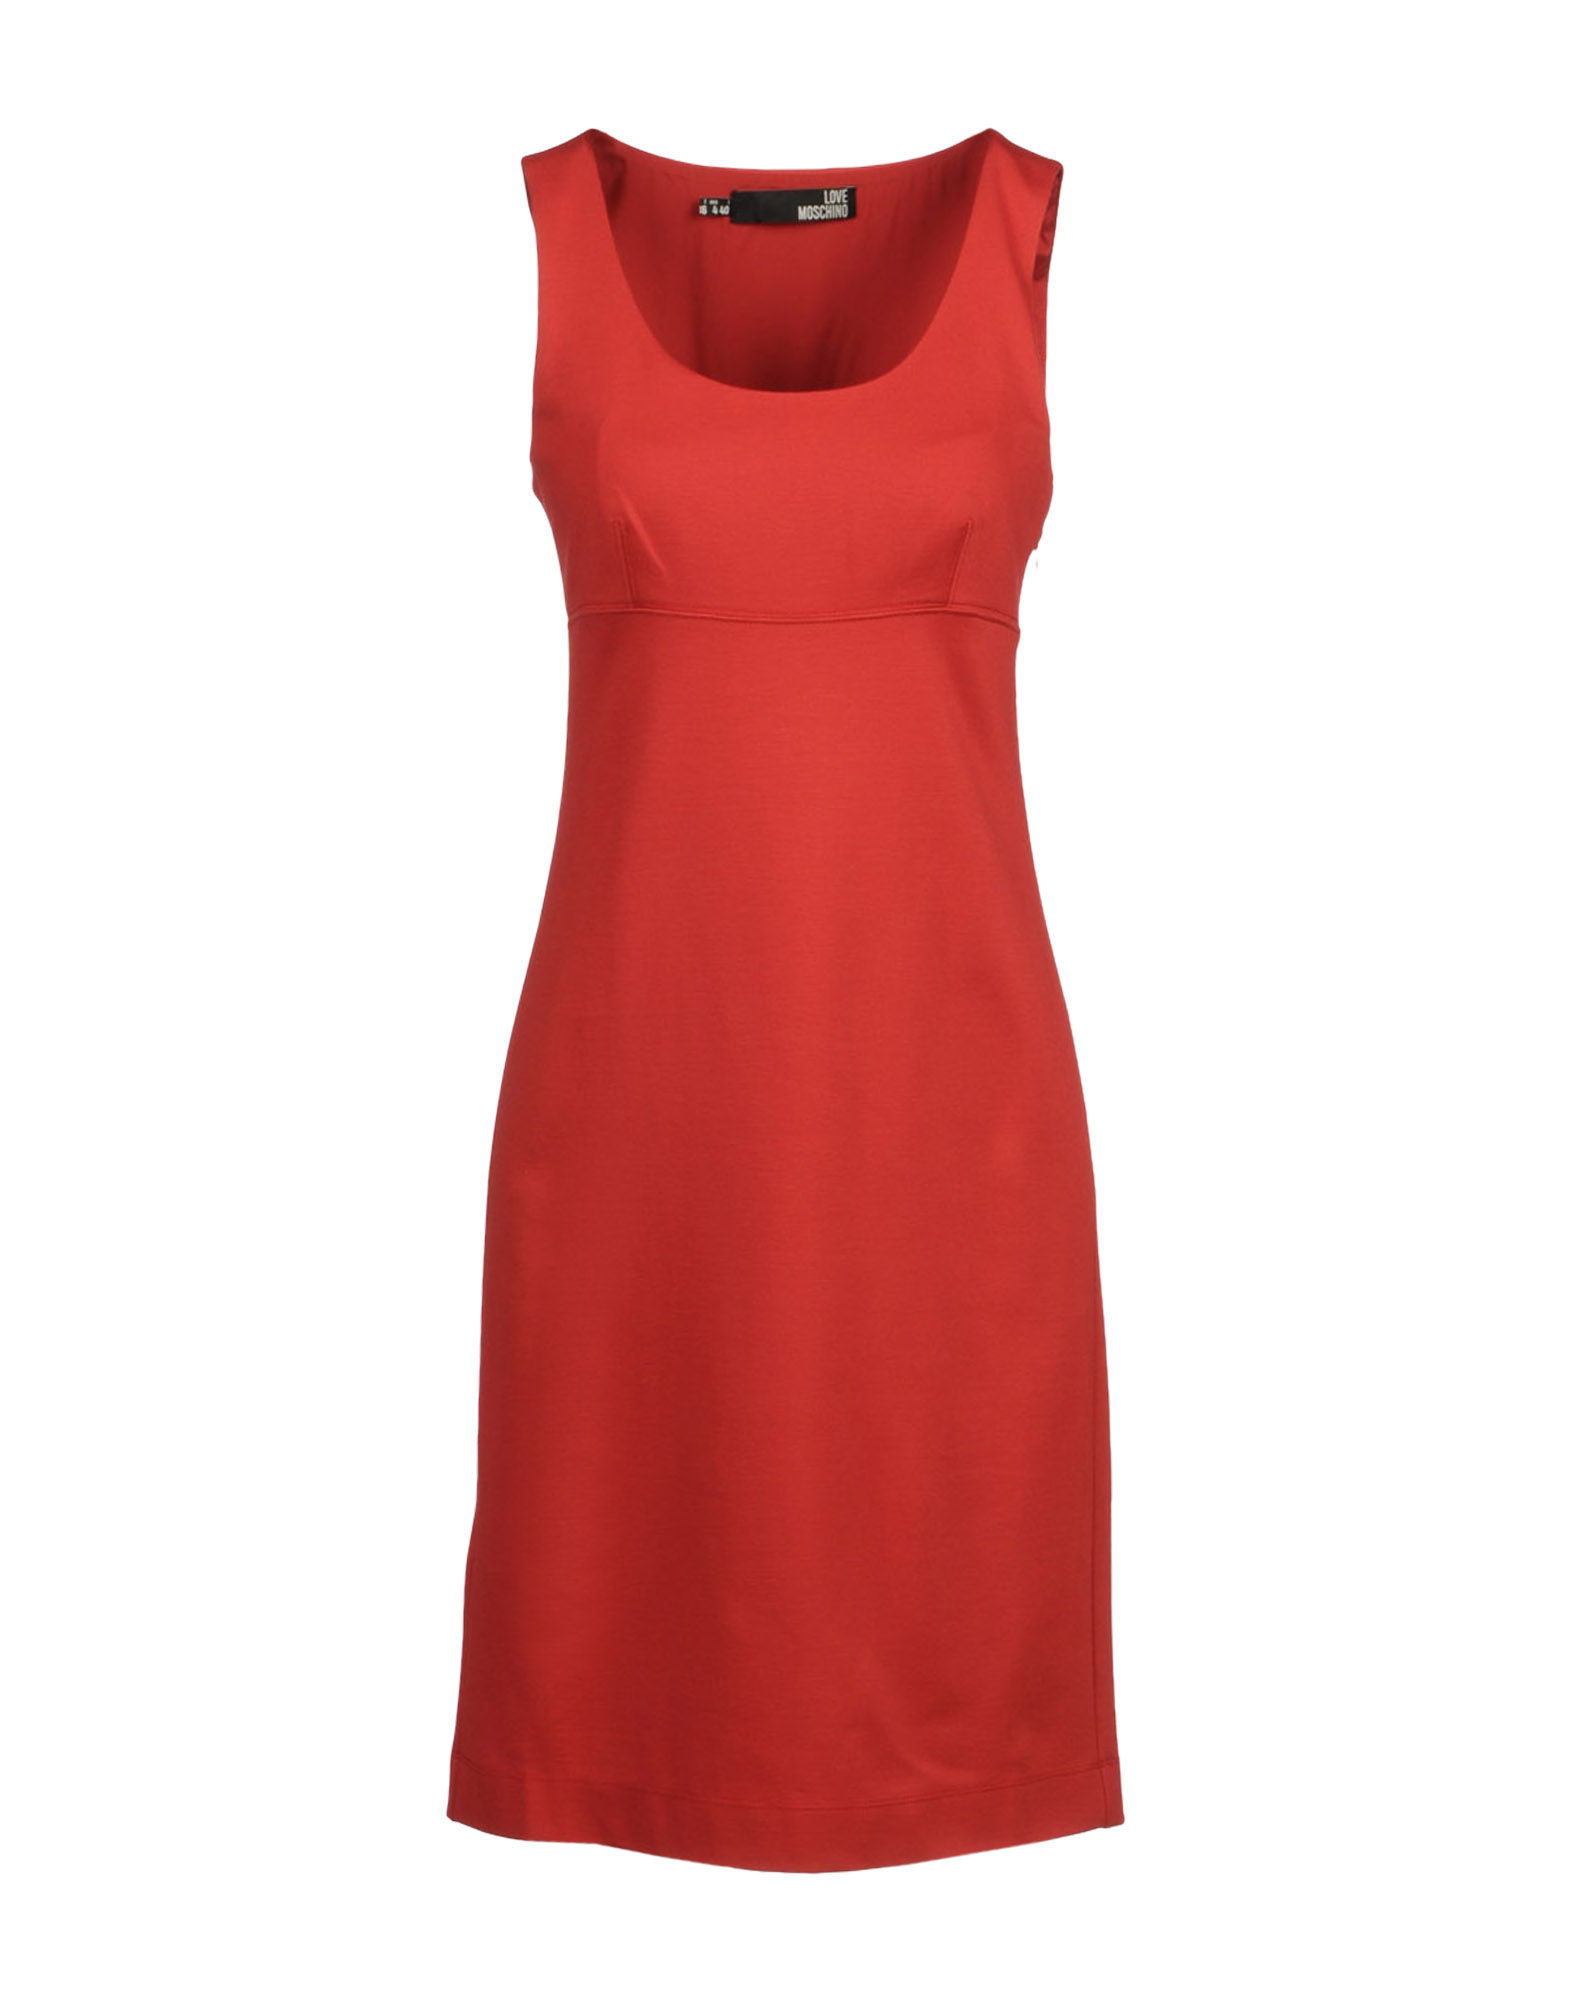 Love Moschino Sleeveless Round Collar Red Short Dress - Lyst